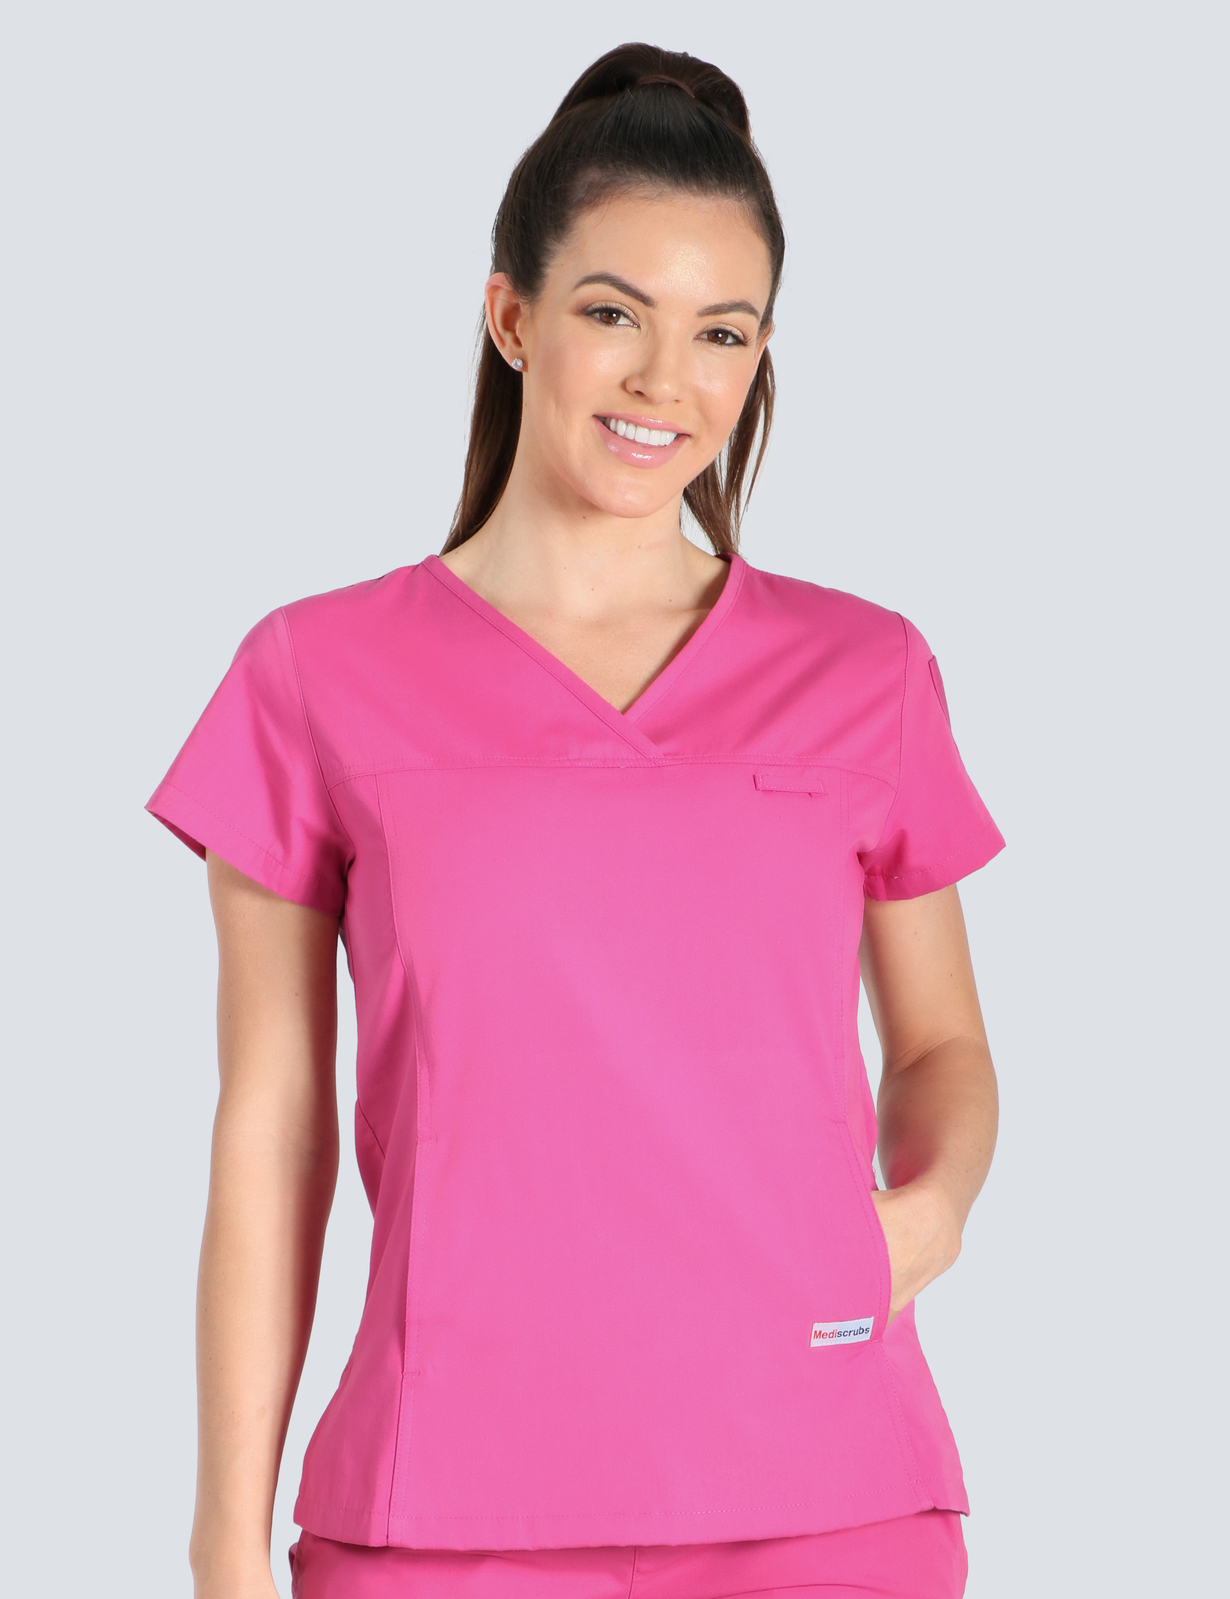 Queensland Children's Hospital Emergency Department Registered  Nurse  Uniform Top Bundle  (Women's Fit Top in Pink incl Logos)